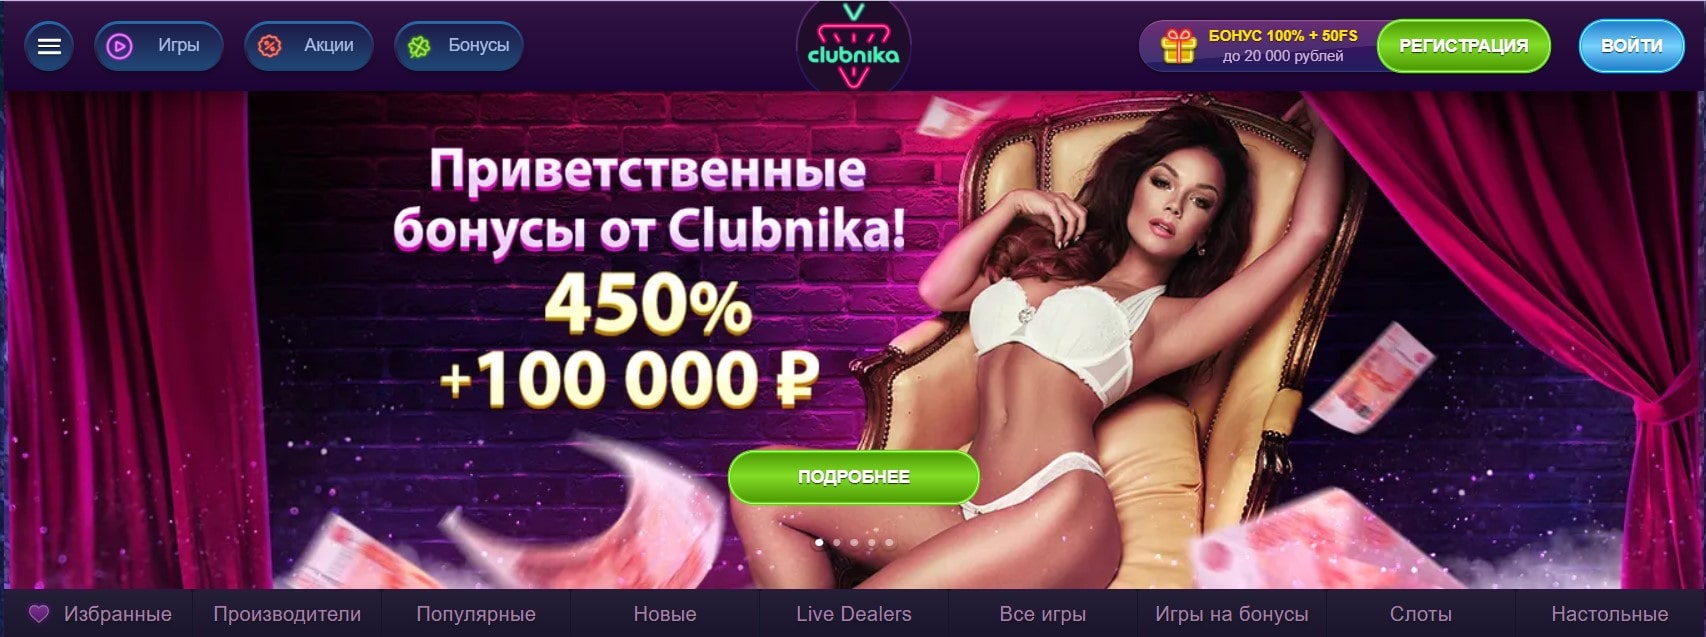 Приветственные бонусы от Clubnika casino